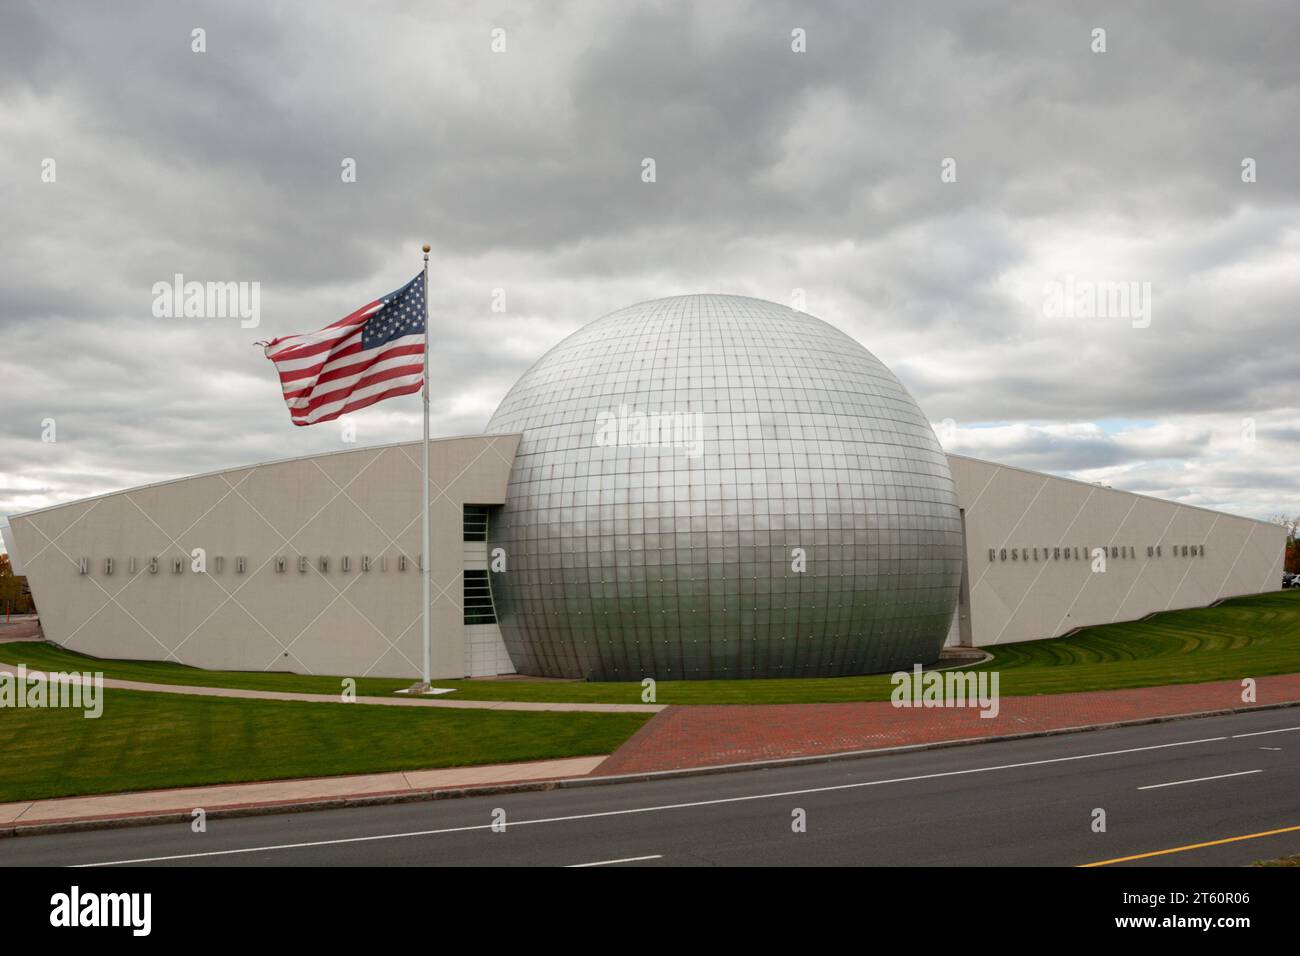 Naismith Memorial Basketball Hall of Fame, Springfield, Massachusetts. Architects: Gwathmey Siegel & Associates. Stock Photo